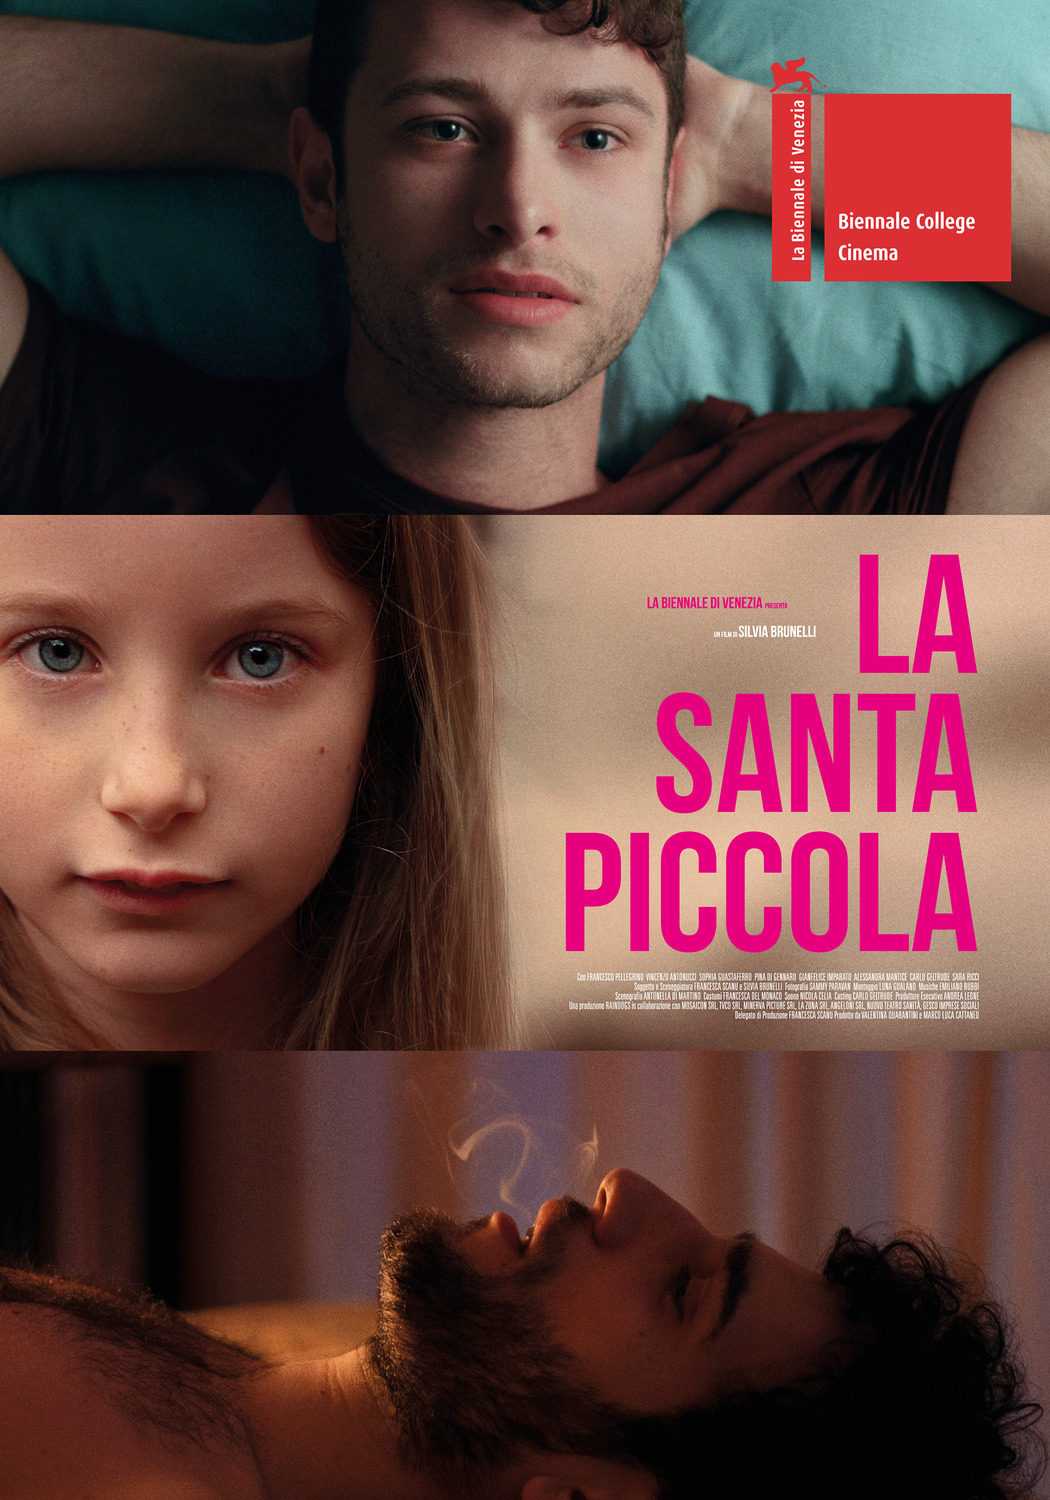 Extra Large Movie Poster Image for La santa piccola 